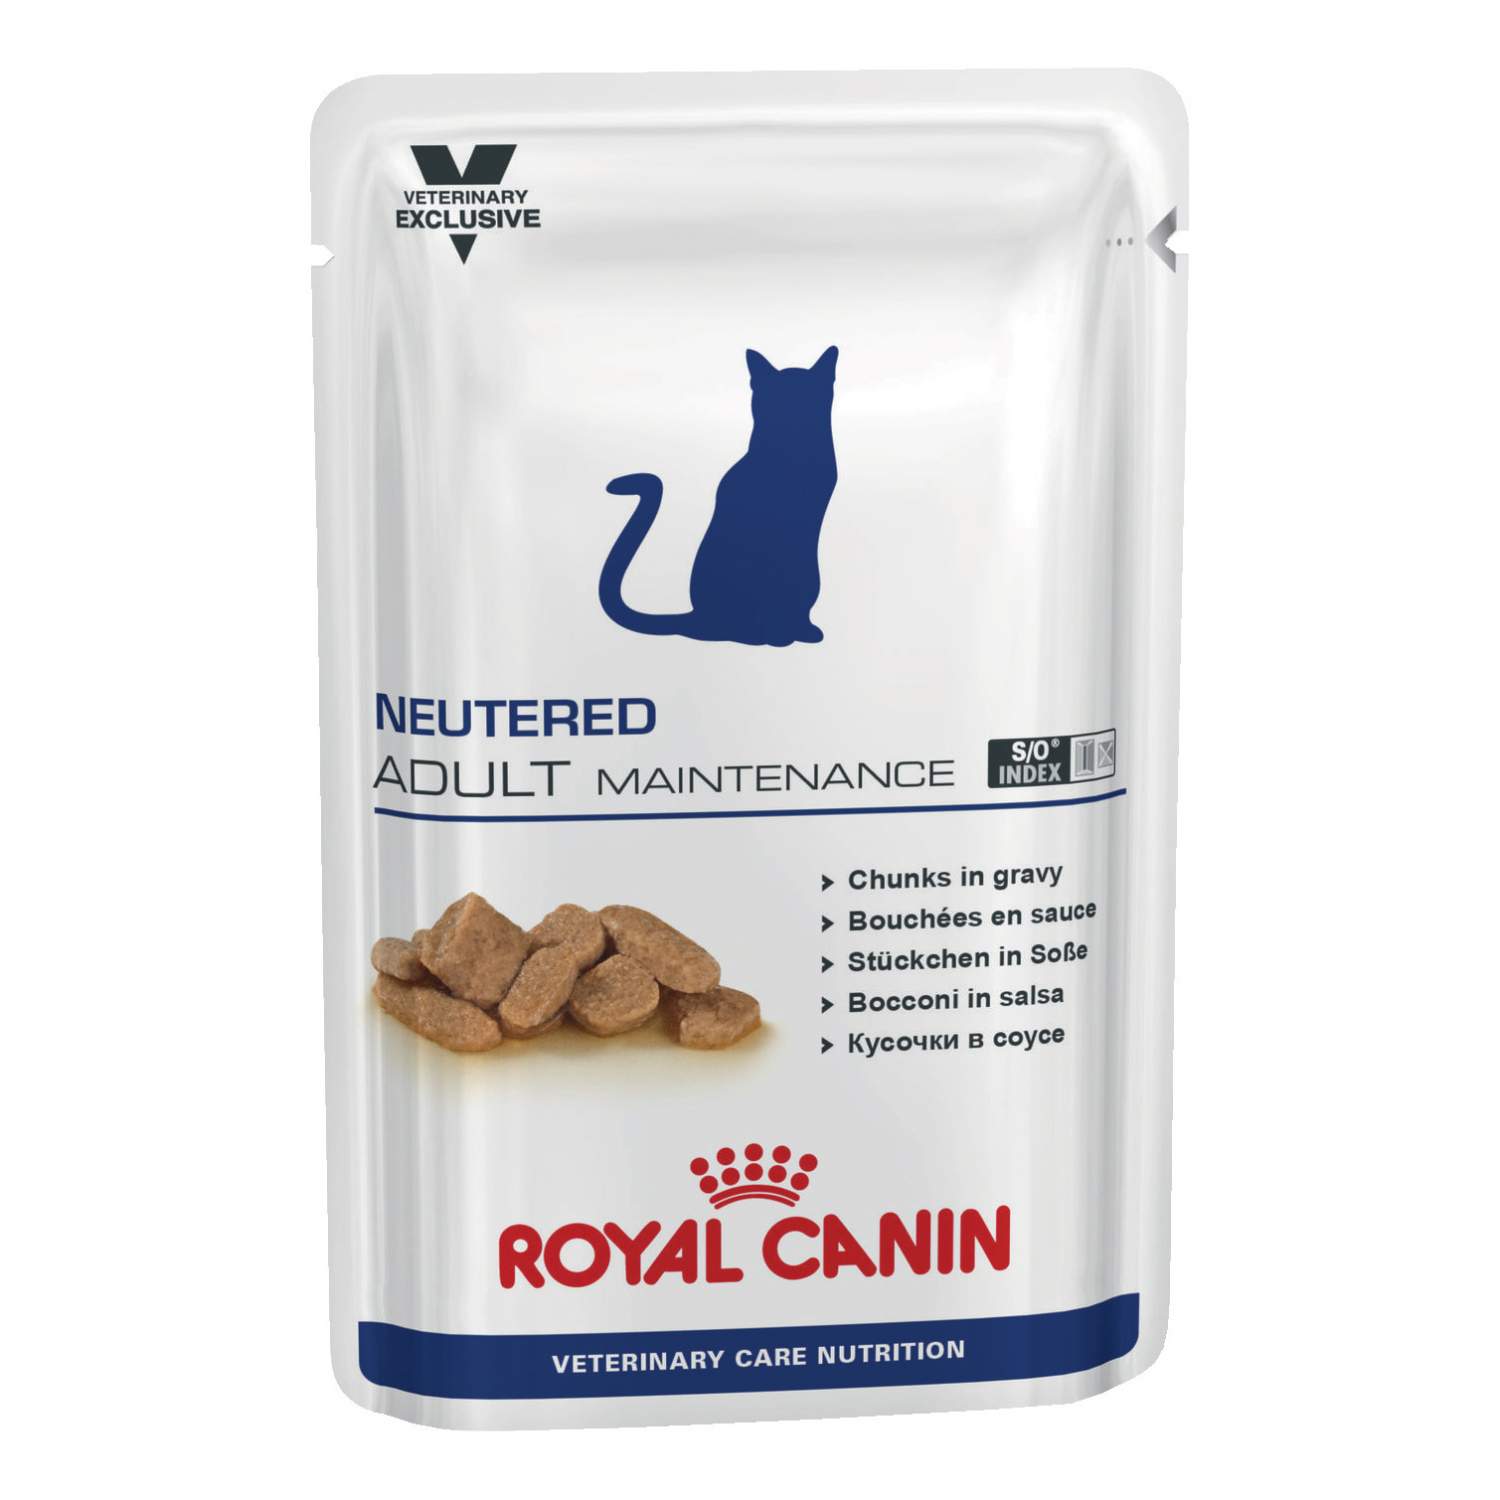 Royal Canin Ньютрид Эдалт Мэйнтенэнс Корм консервированный для кошек (пауч)